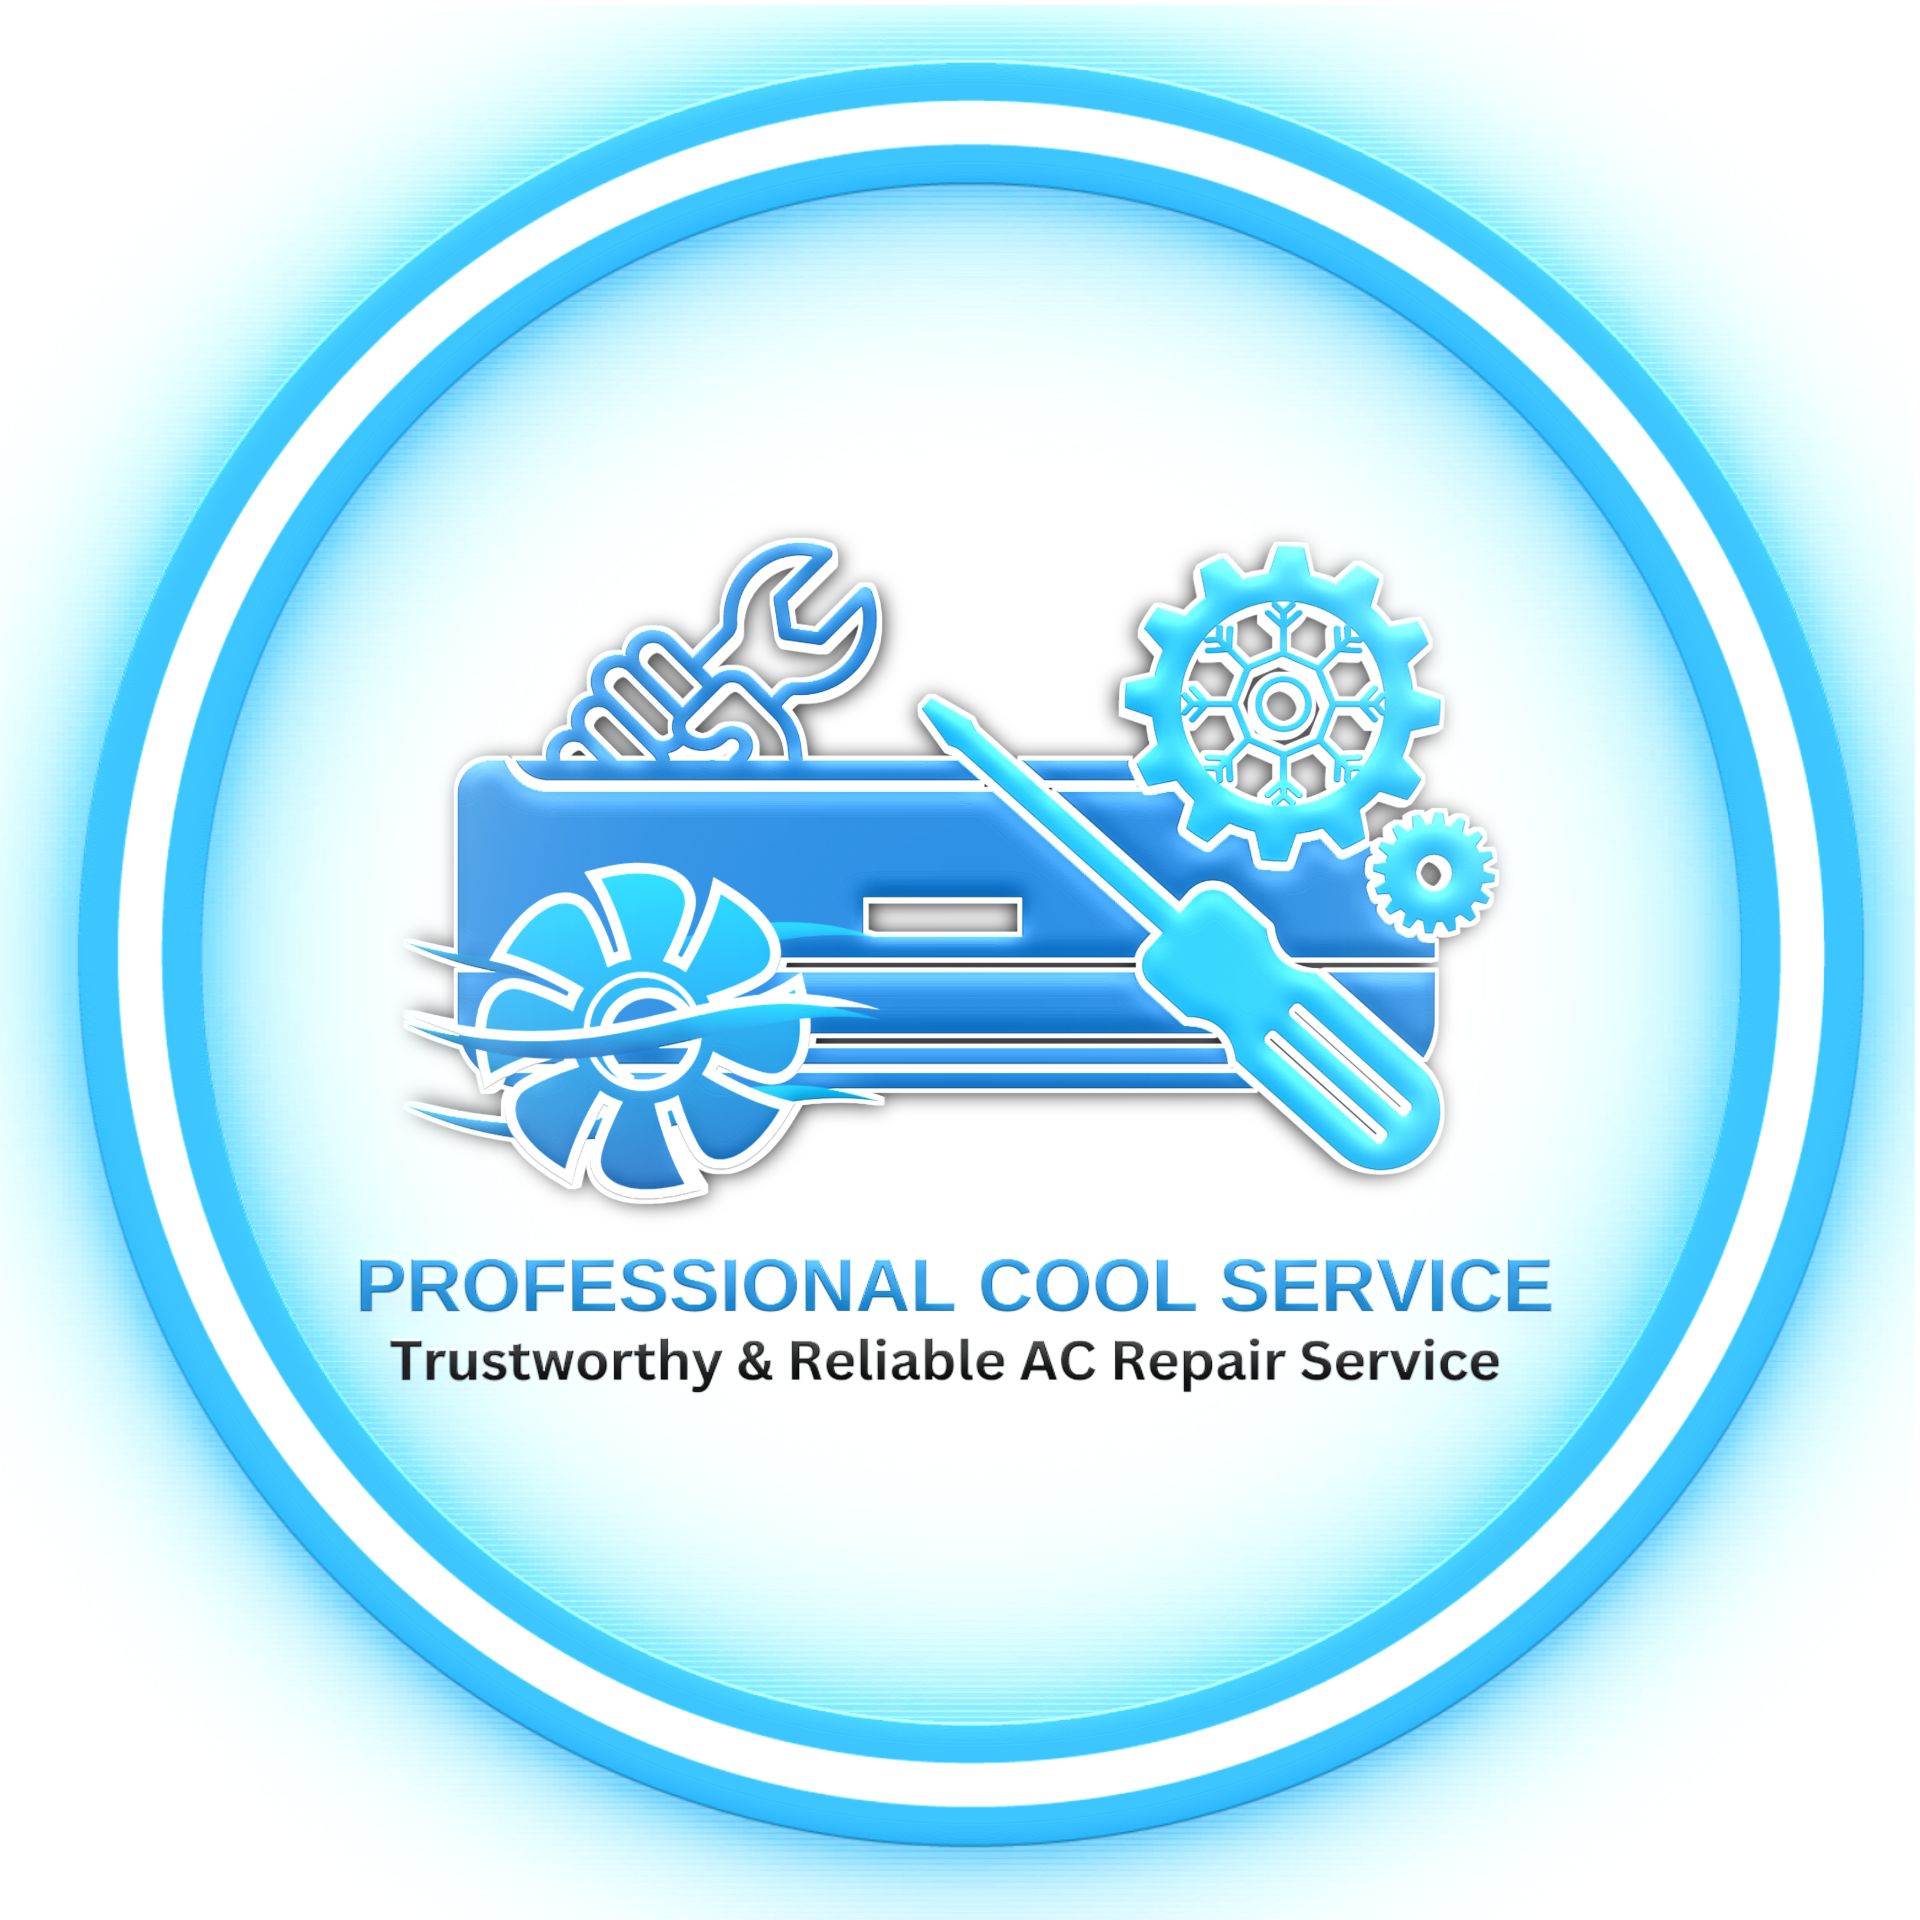 professional cool service | ac repair services in mapusa